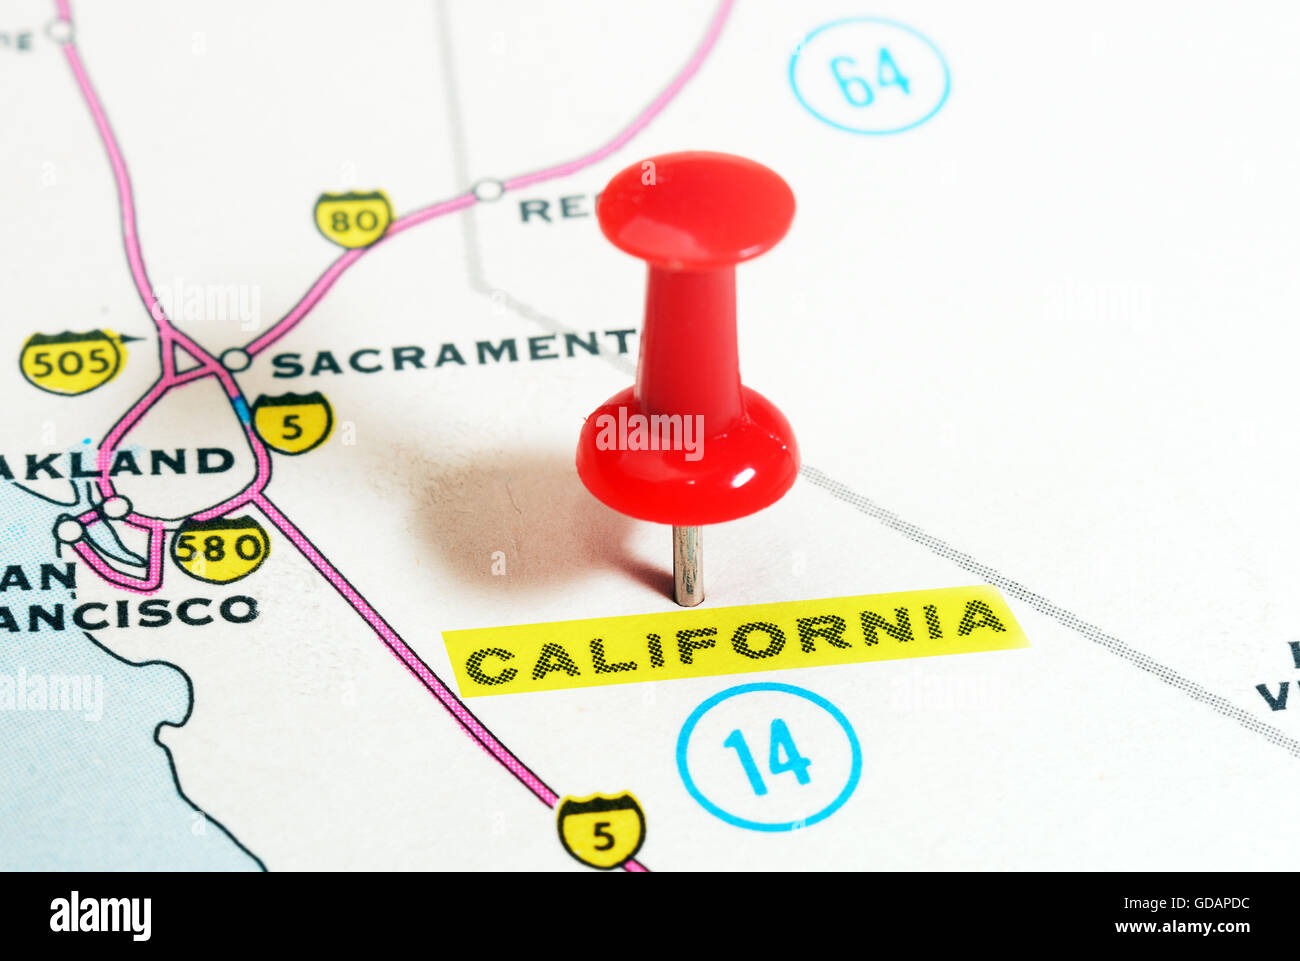 STATE MAP TRAVEL PIN CALIFORNIA 